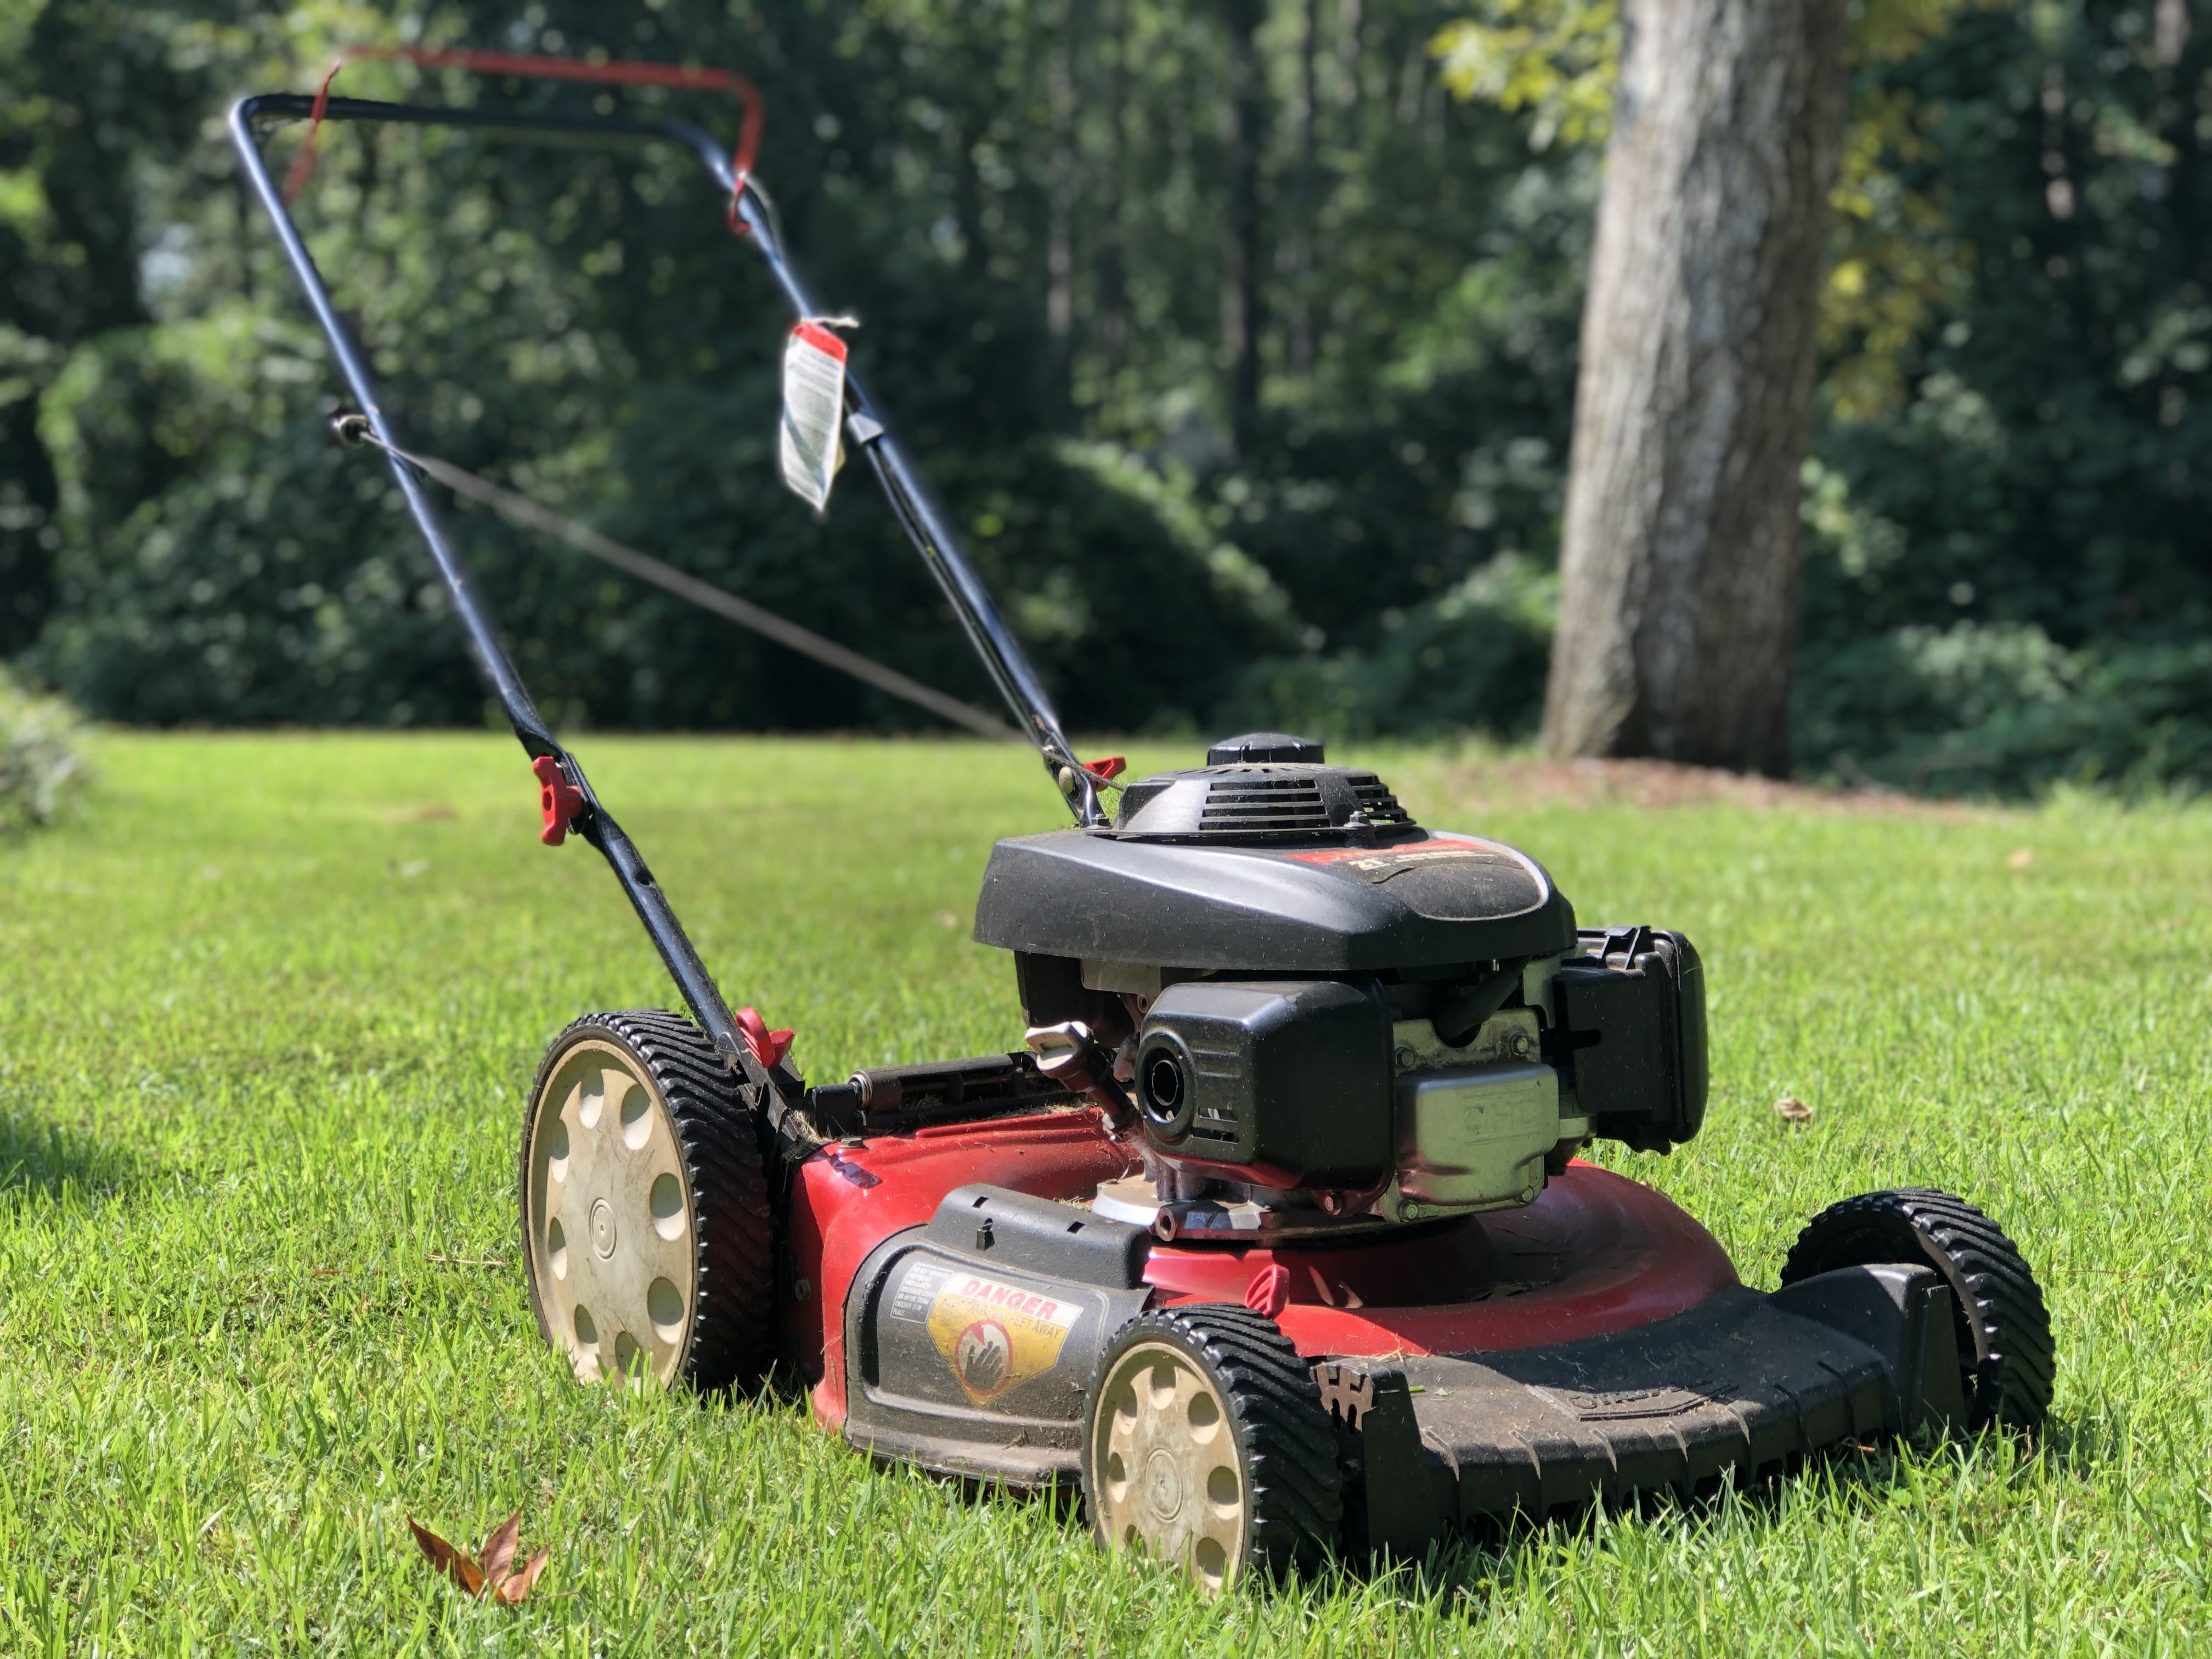 Winterize a Lawn Mower | Lawn Mower Storage Guide 2019